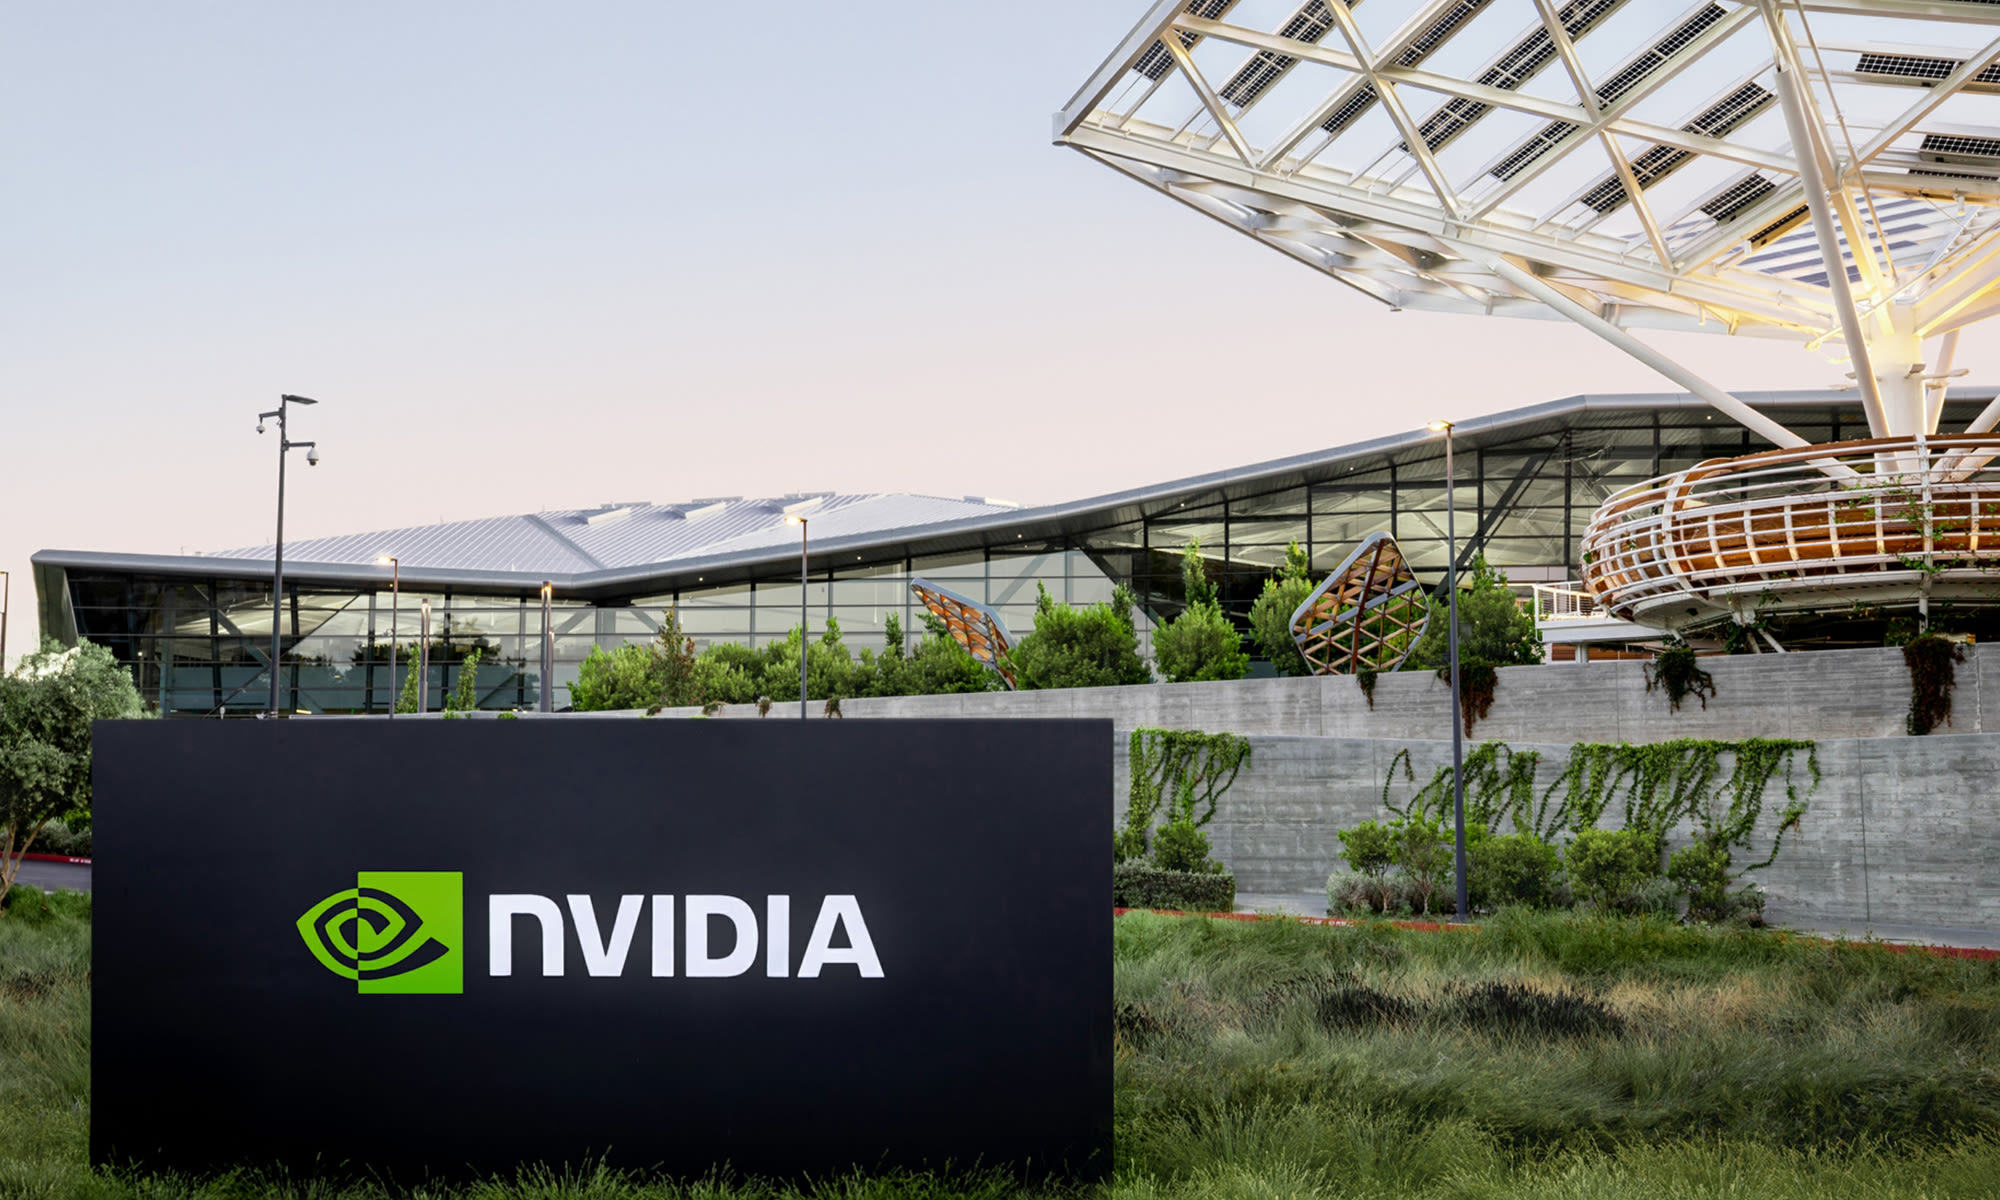 xAI, Elon Musk's Artificial Intelligence (AI) Company, Has Spectacular News for Nvidia Stock Investors